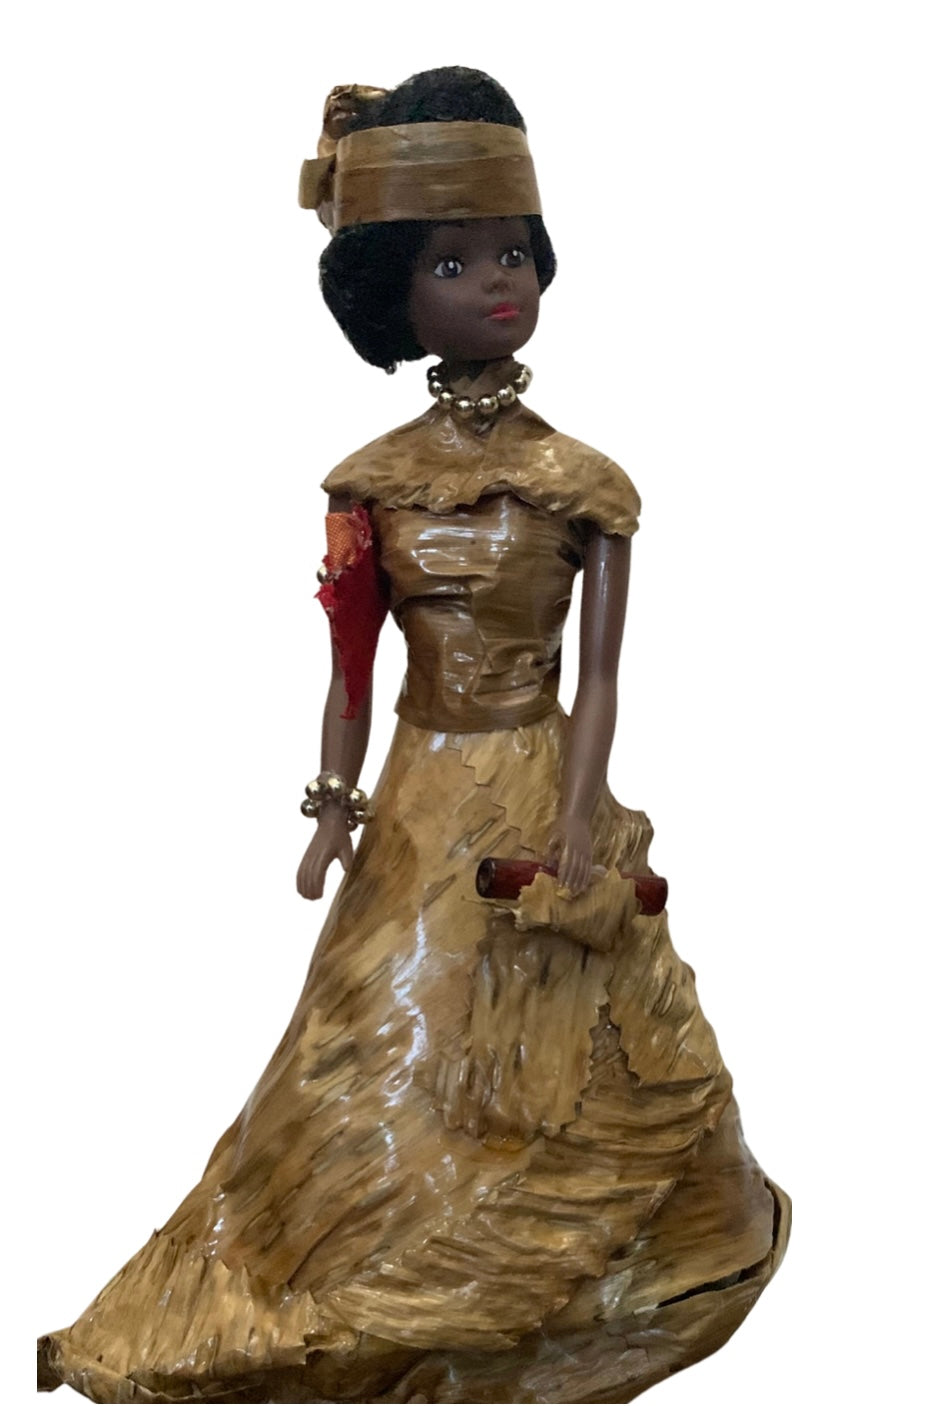 Dominica Madras Dolls - Unique Handmade Treasure Art Dolls freeshipping - Buydominicaonline.com